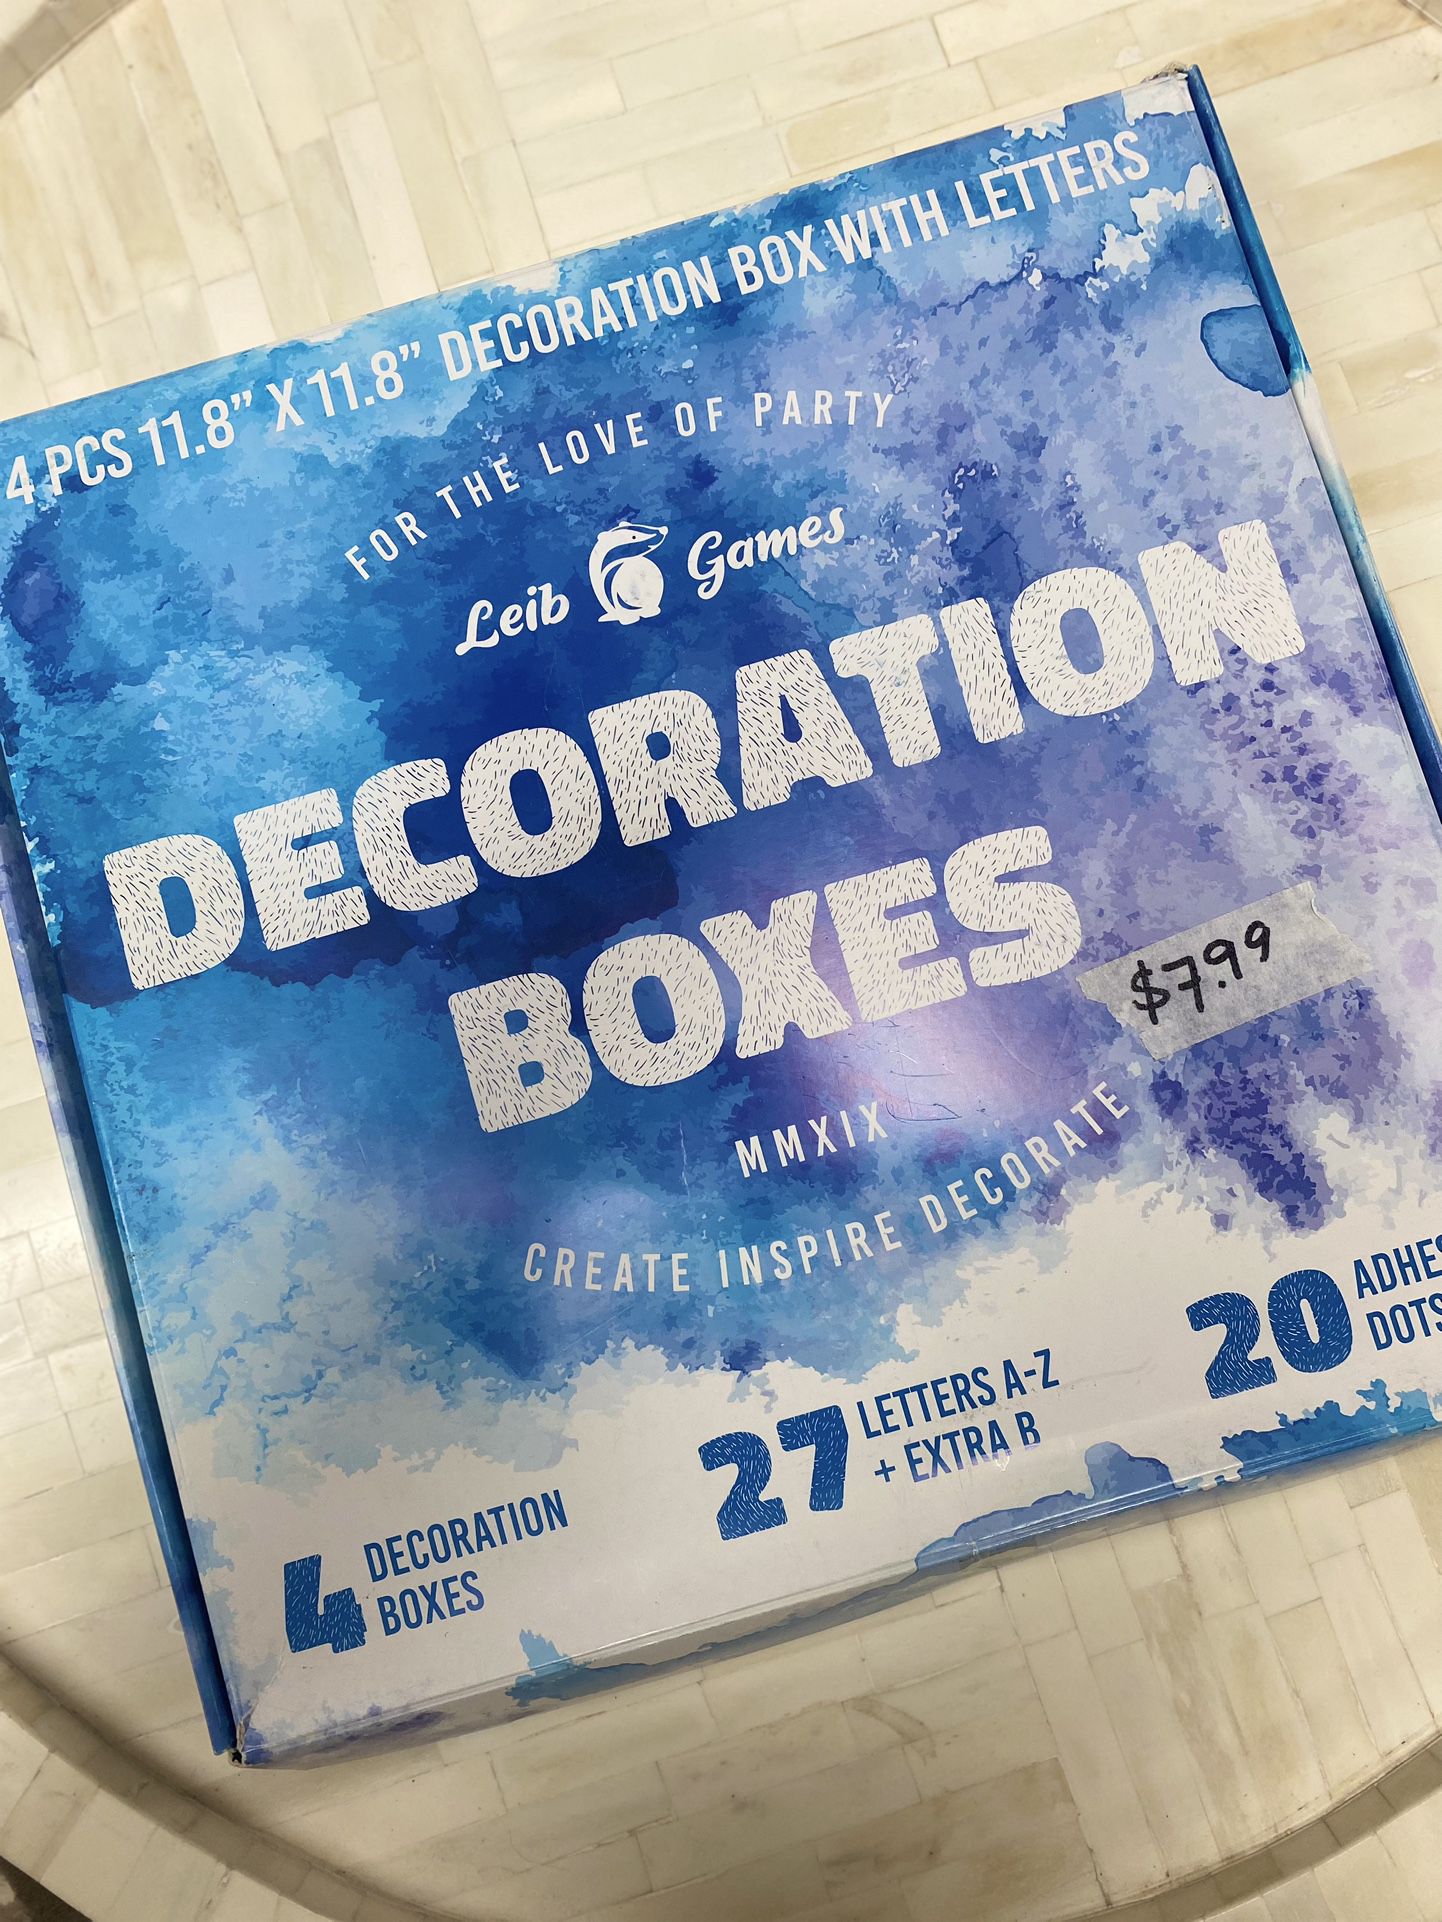 Brand New Decorative Boxes $7.99 